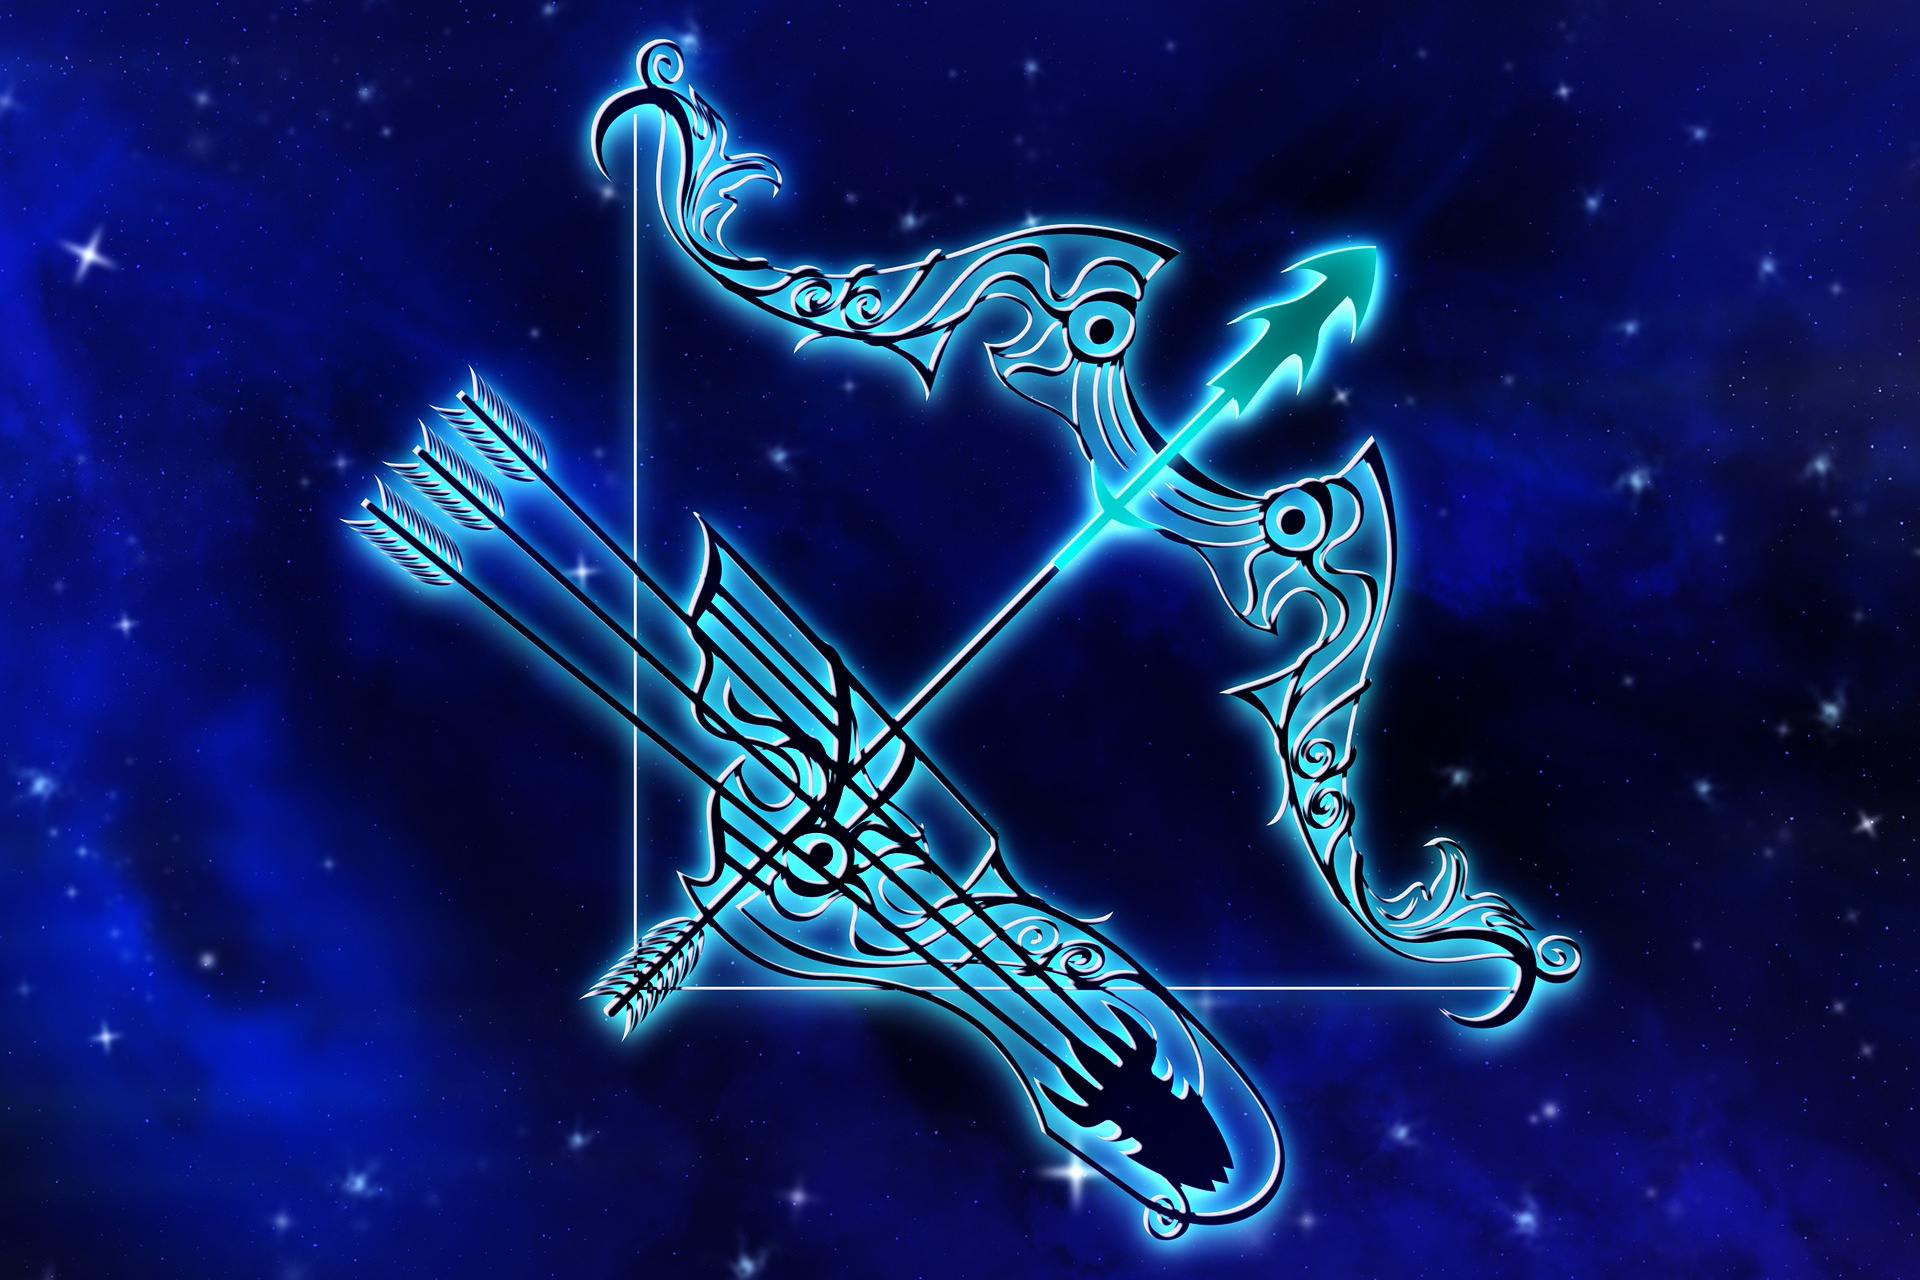 Sagittarius (November 22 to December 21)